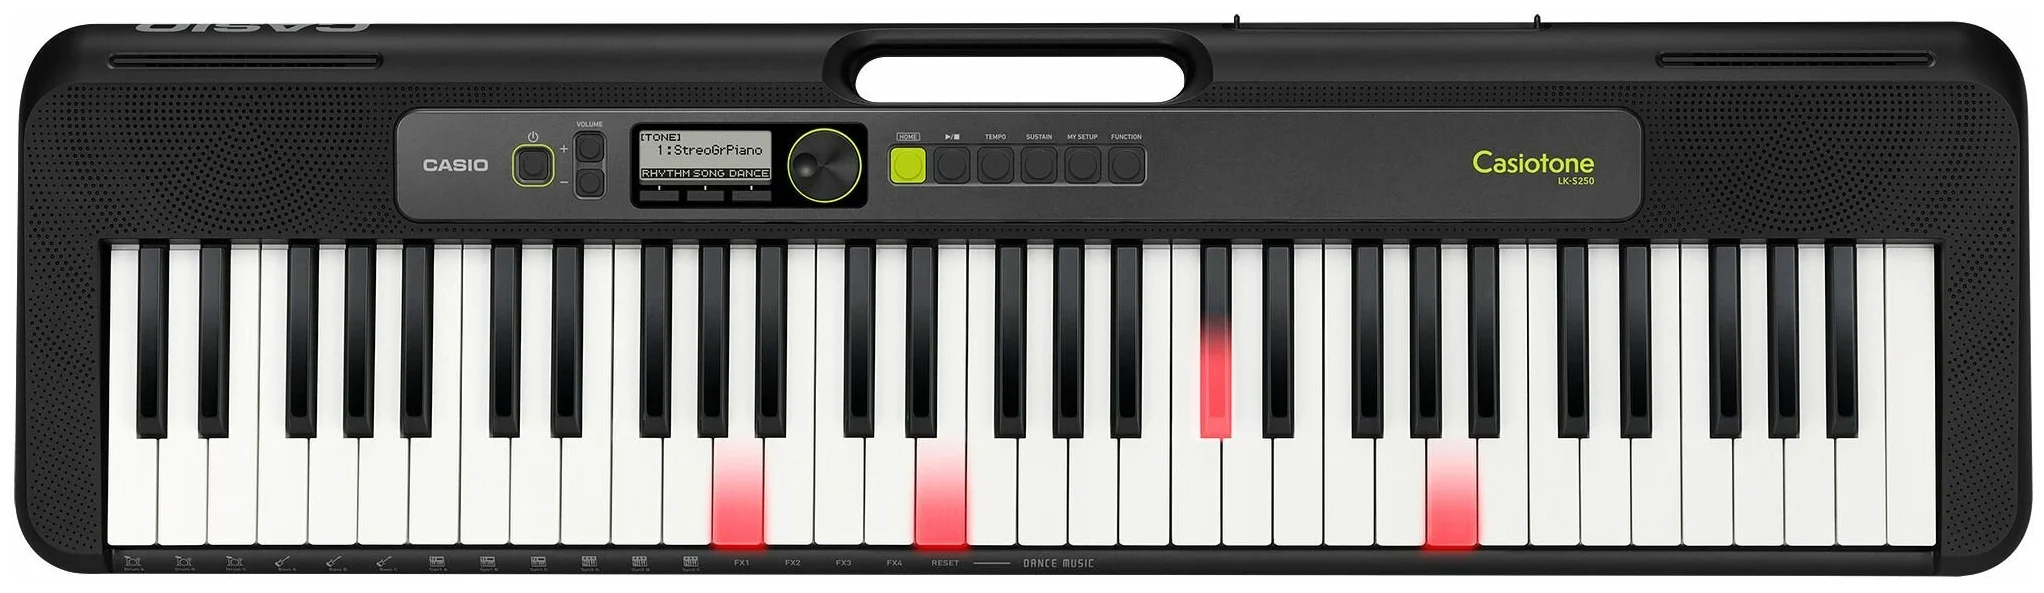 CASIO LK-S250 - размер клавиш: полноразмерные